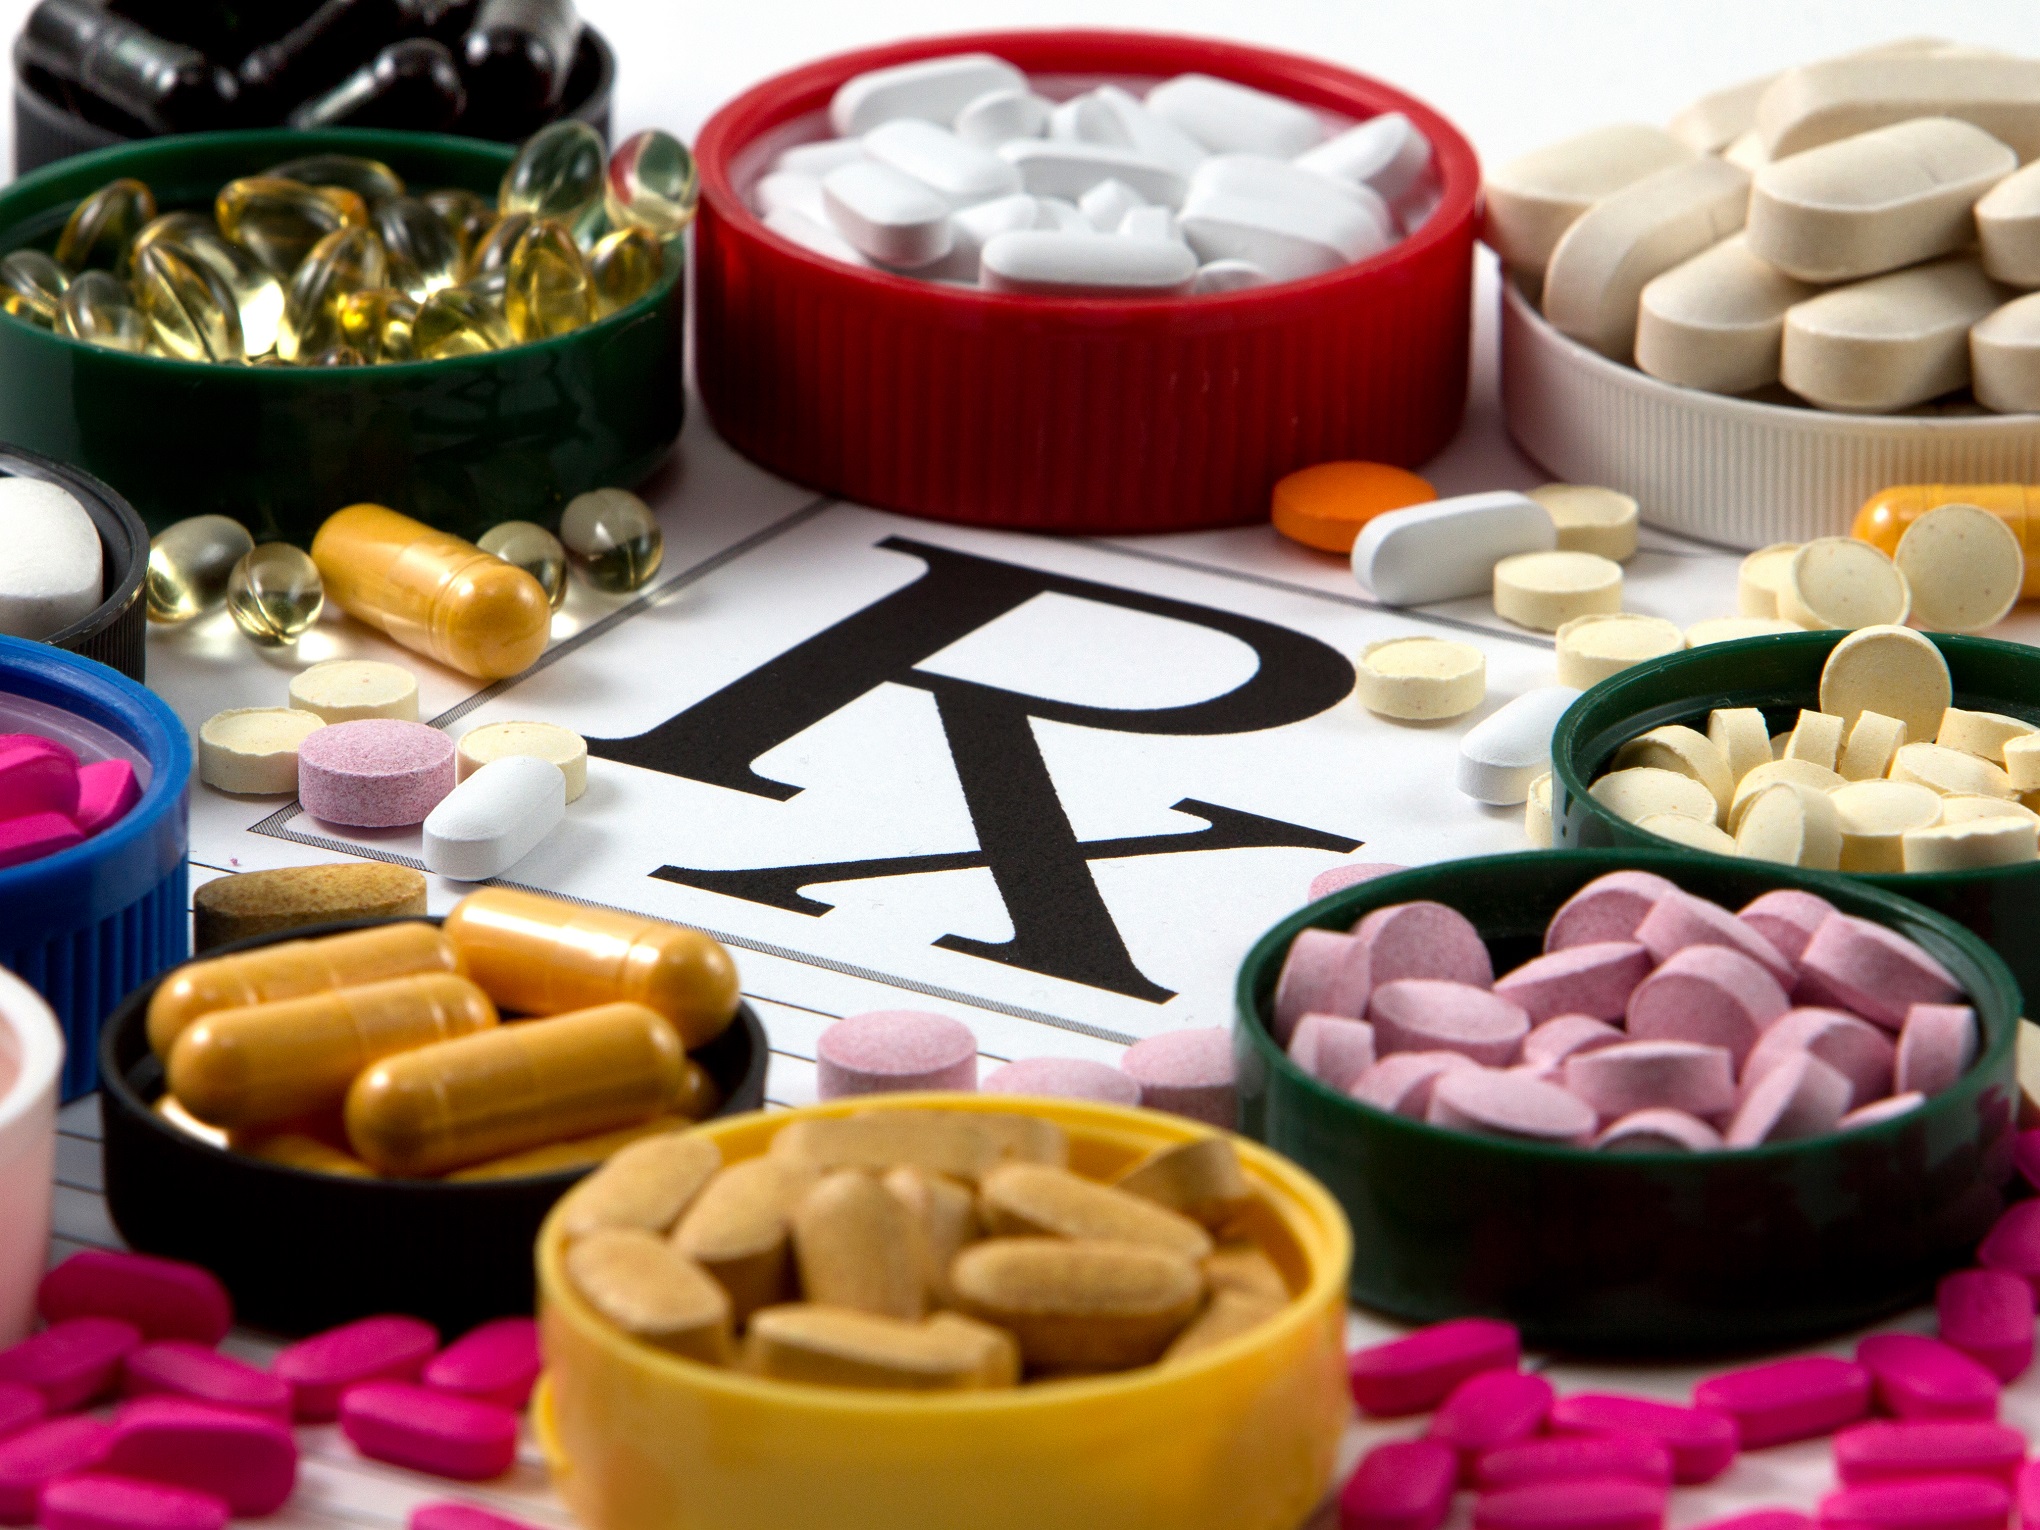 know-taking-supplements-taking-prescription-drugs.jpg